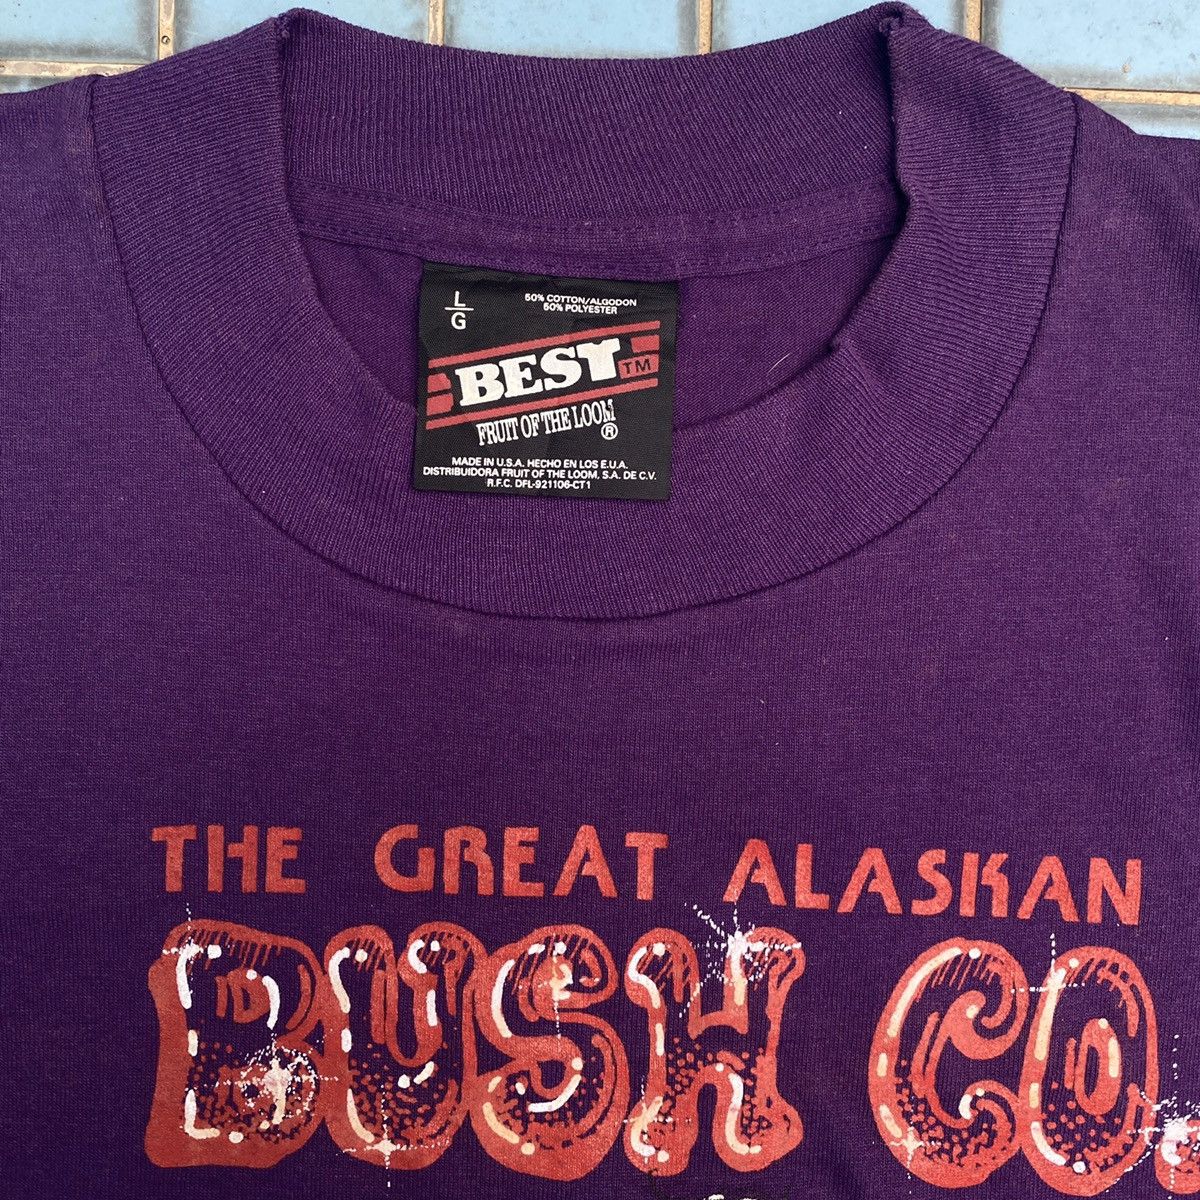 Vintage Vintage 80’s The Great Alaskan “Bush Co.” T-Shirt Size US L / EU 52-54 / 3 - 4 Thumbnail